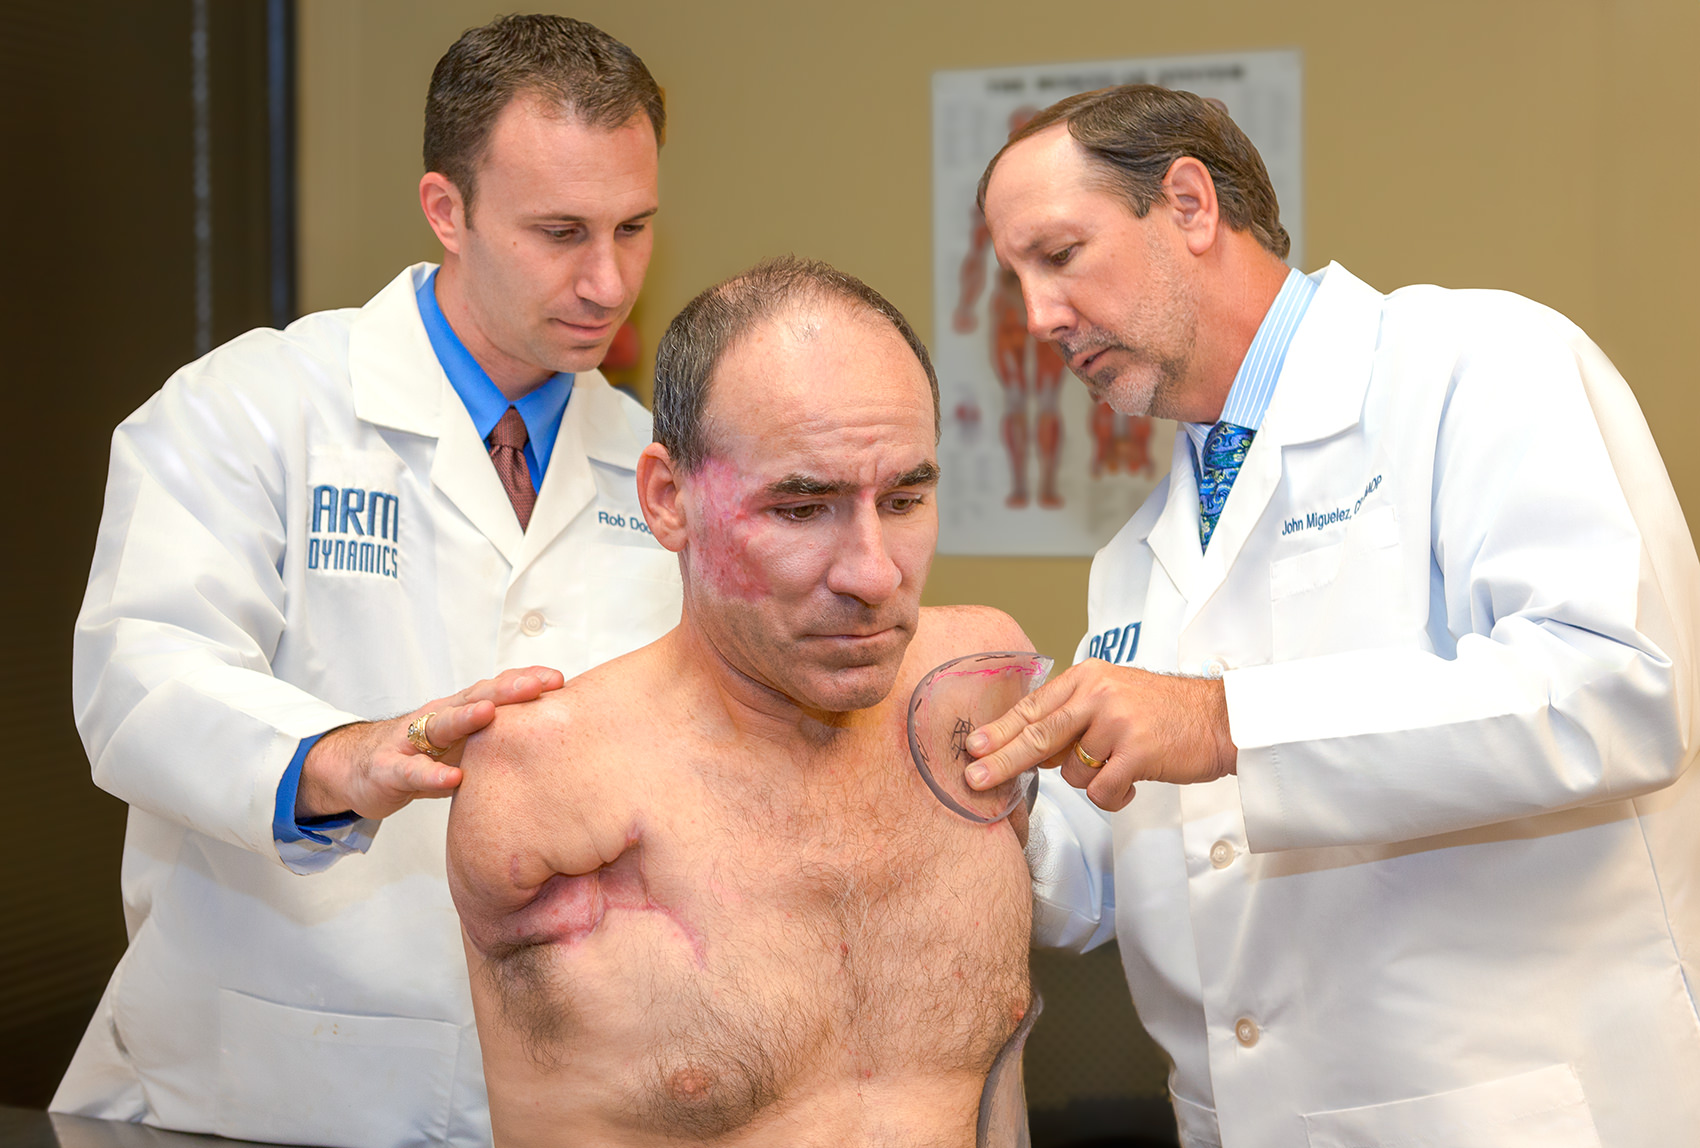 Bilateral Shoulder Disarticulation patient being fit at the Southwest Center